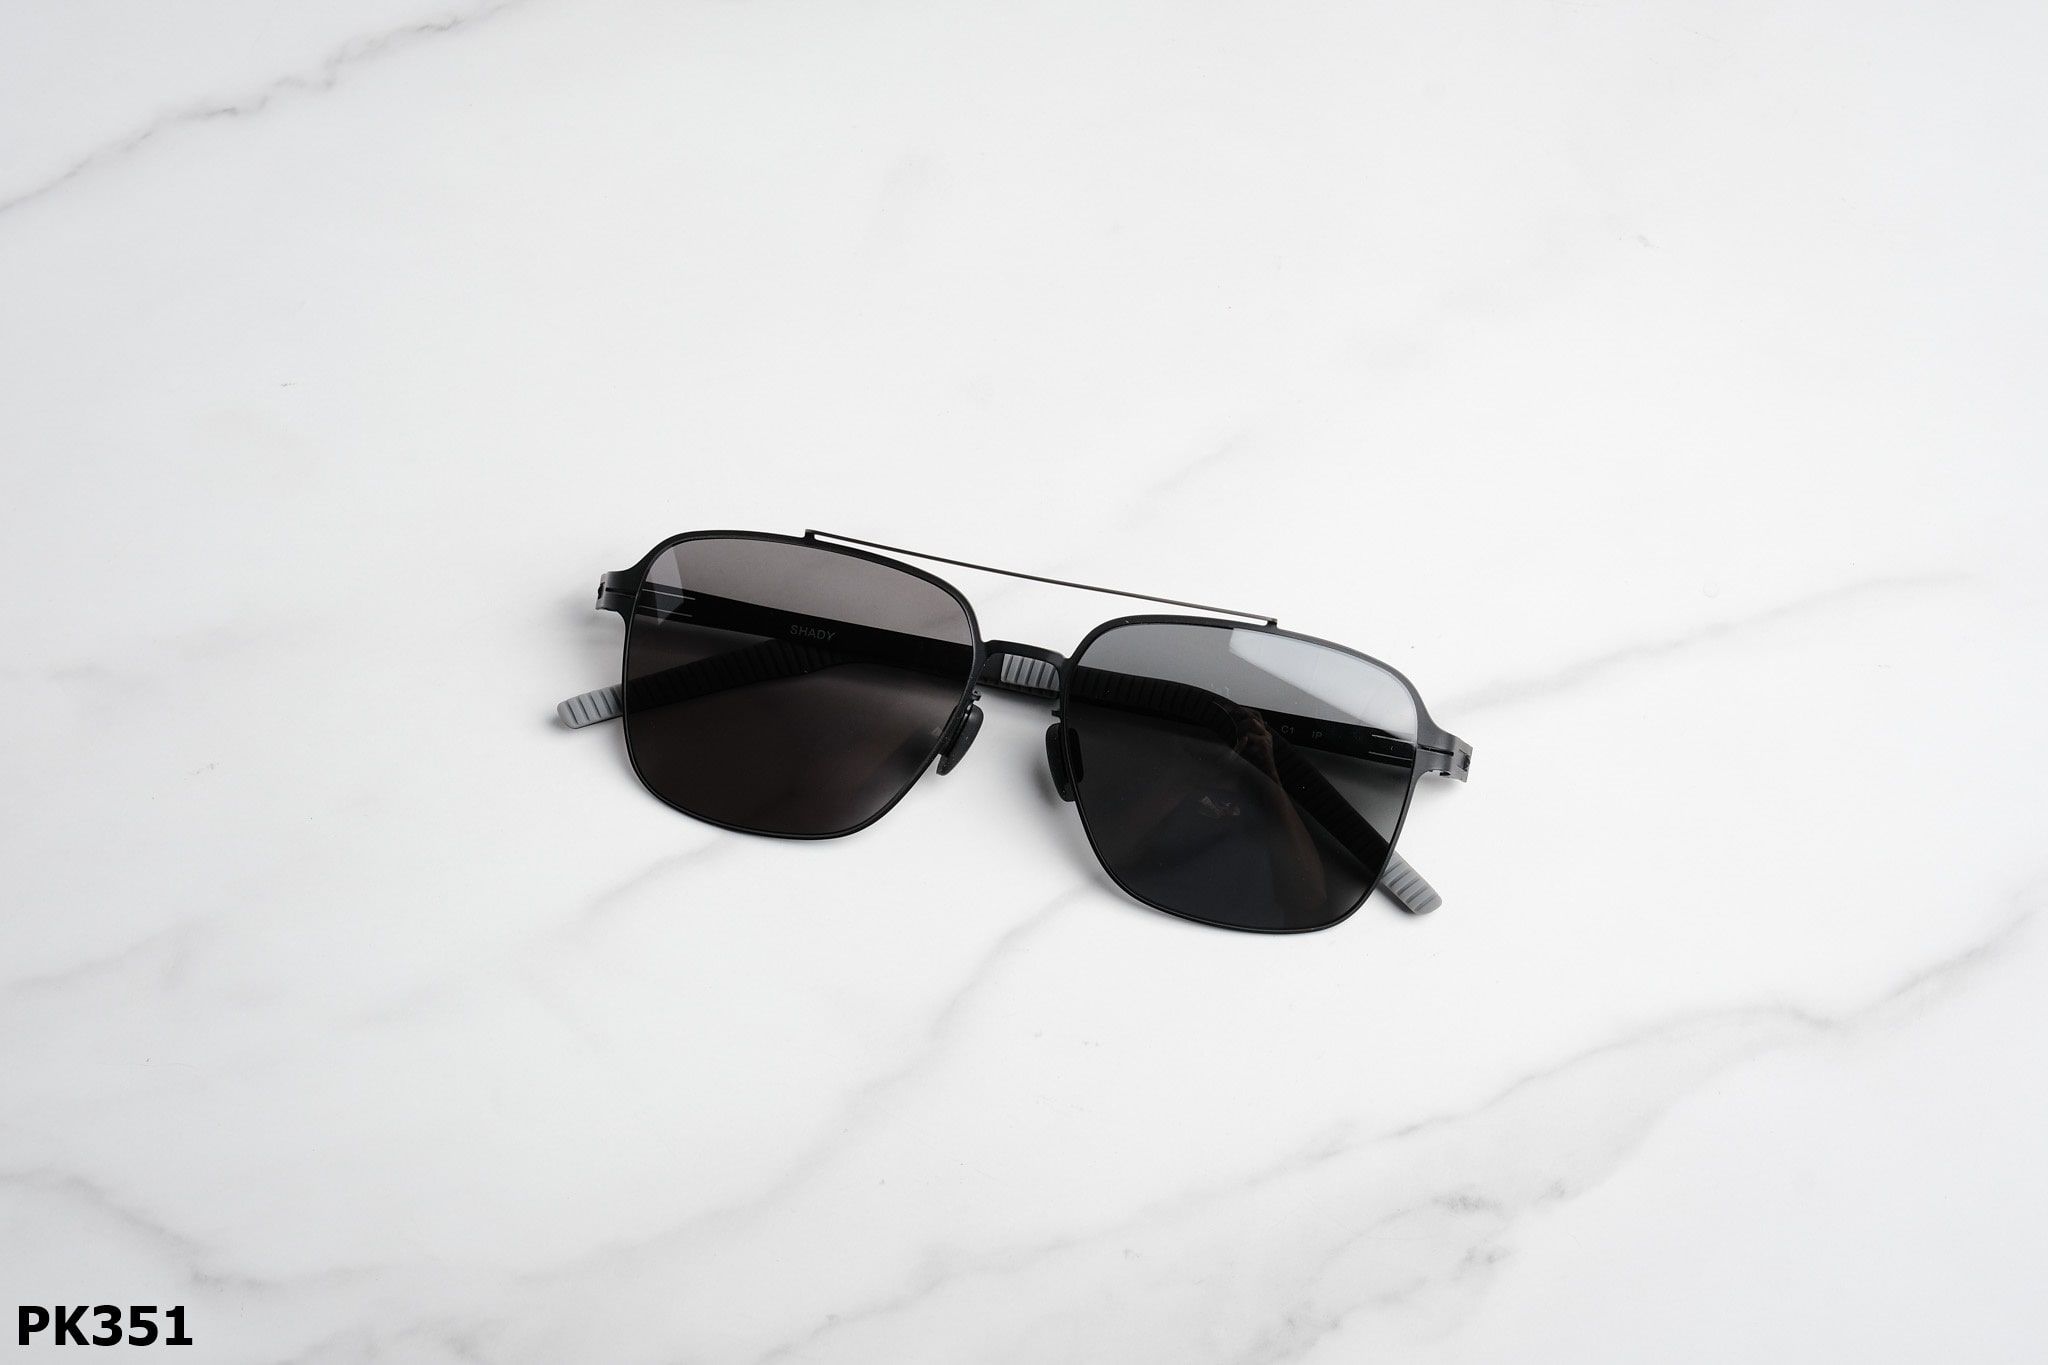  SHADY Eyewear - Sunglasses - PK351 